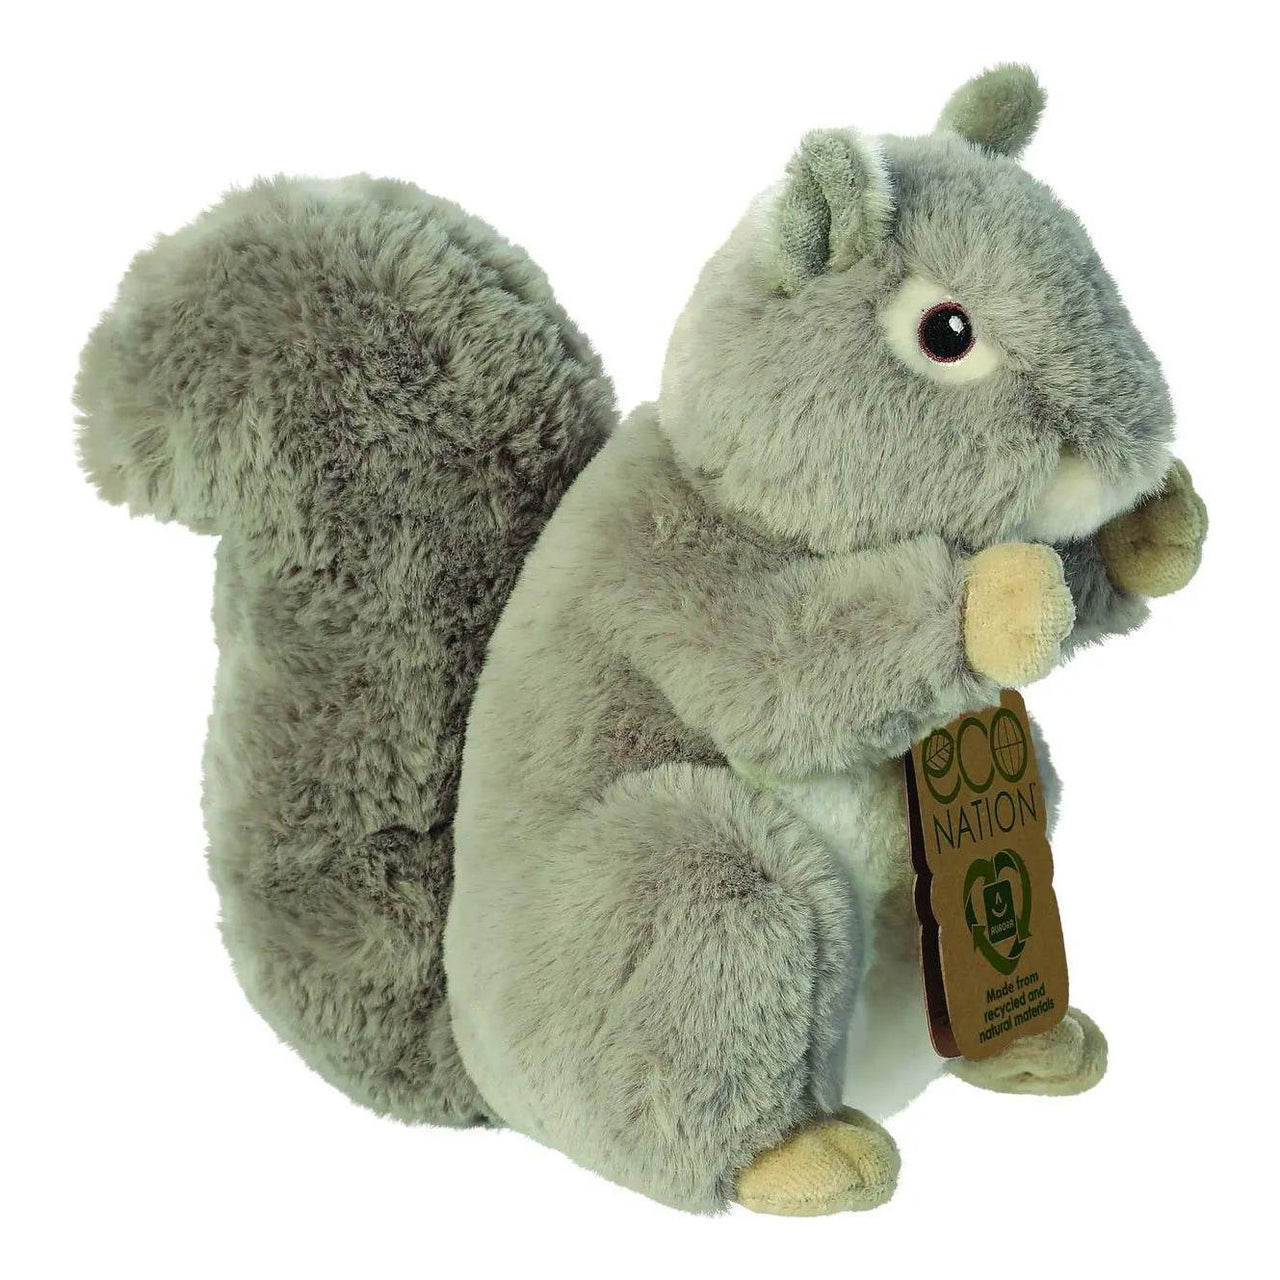 Eco Nation Squirrel 8" Plush Toy Aurora